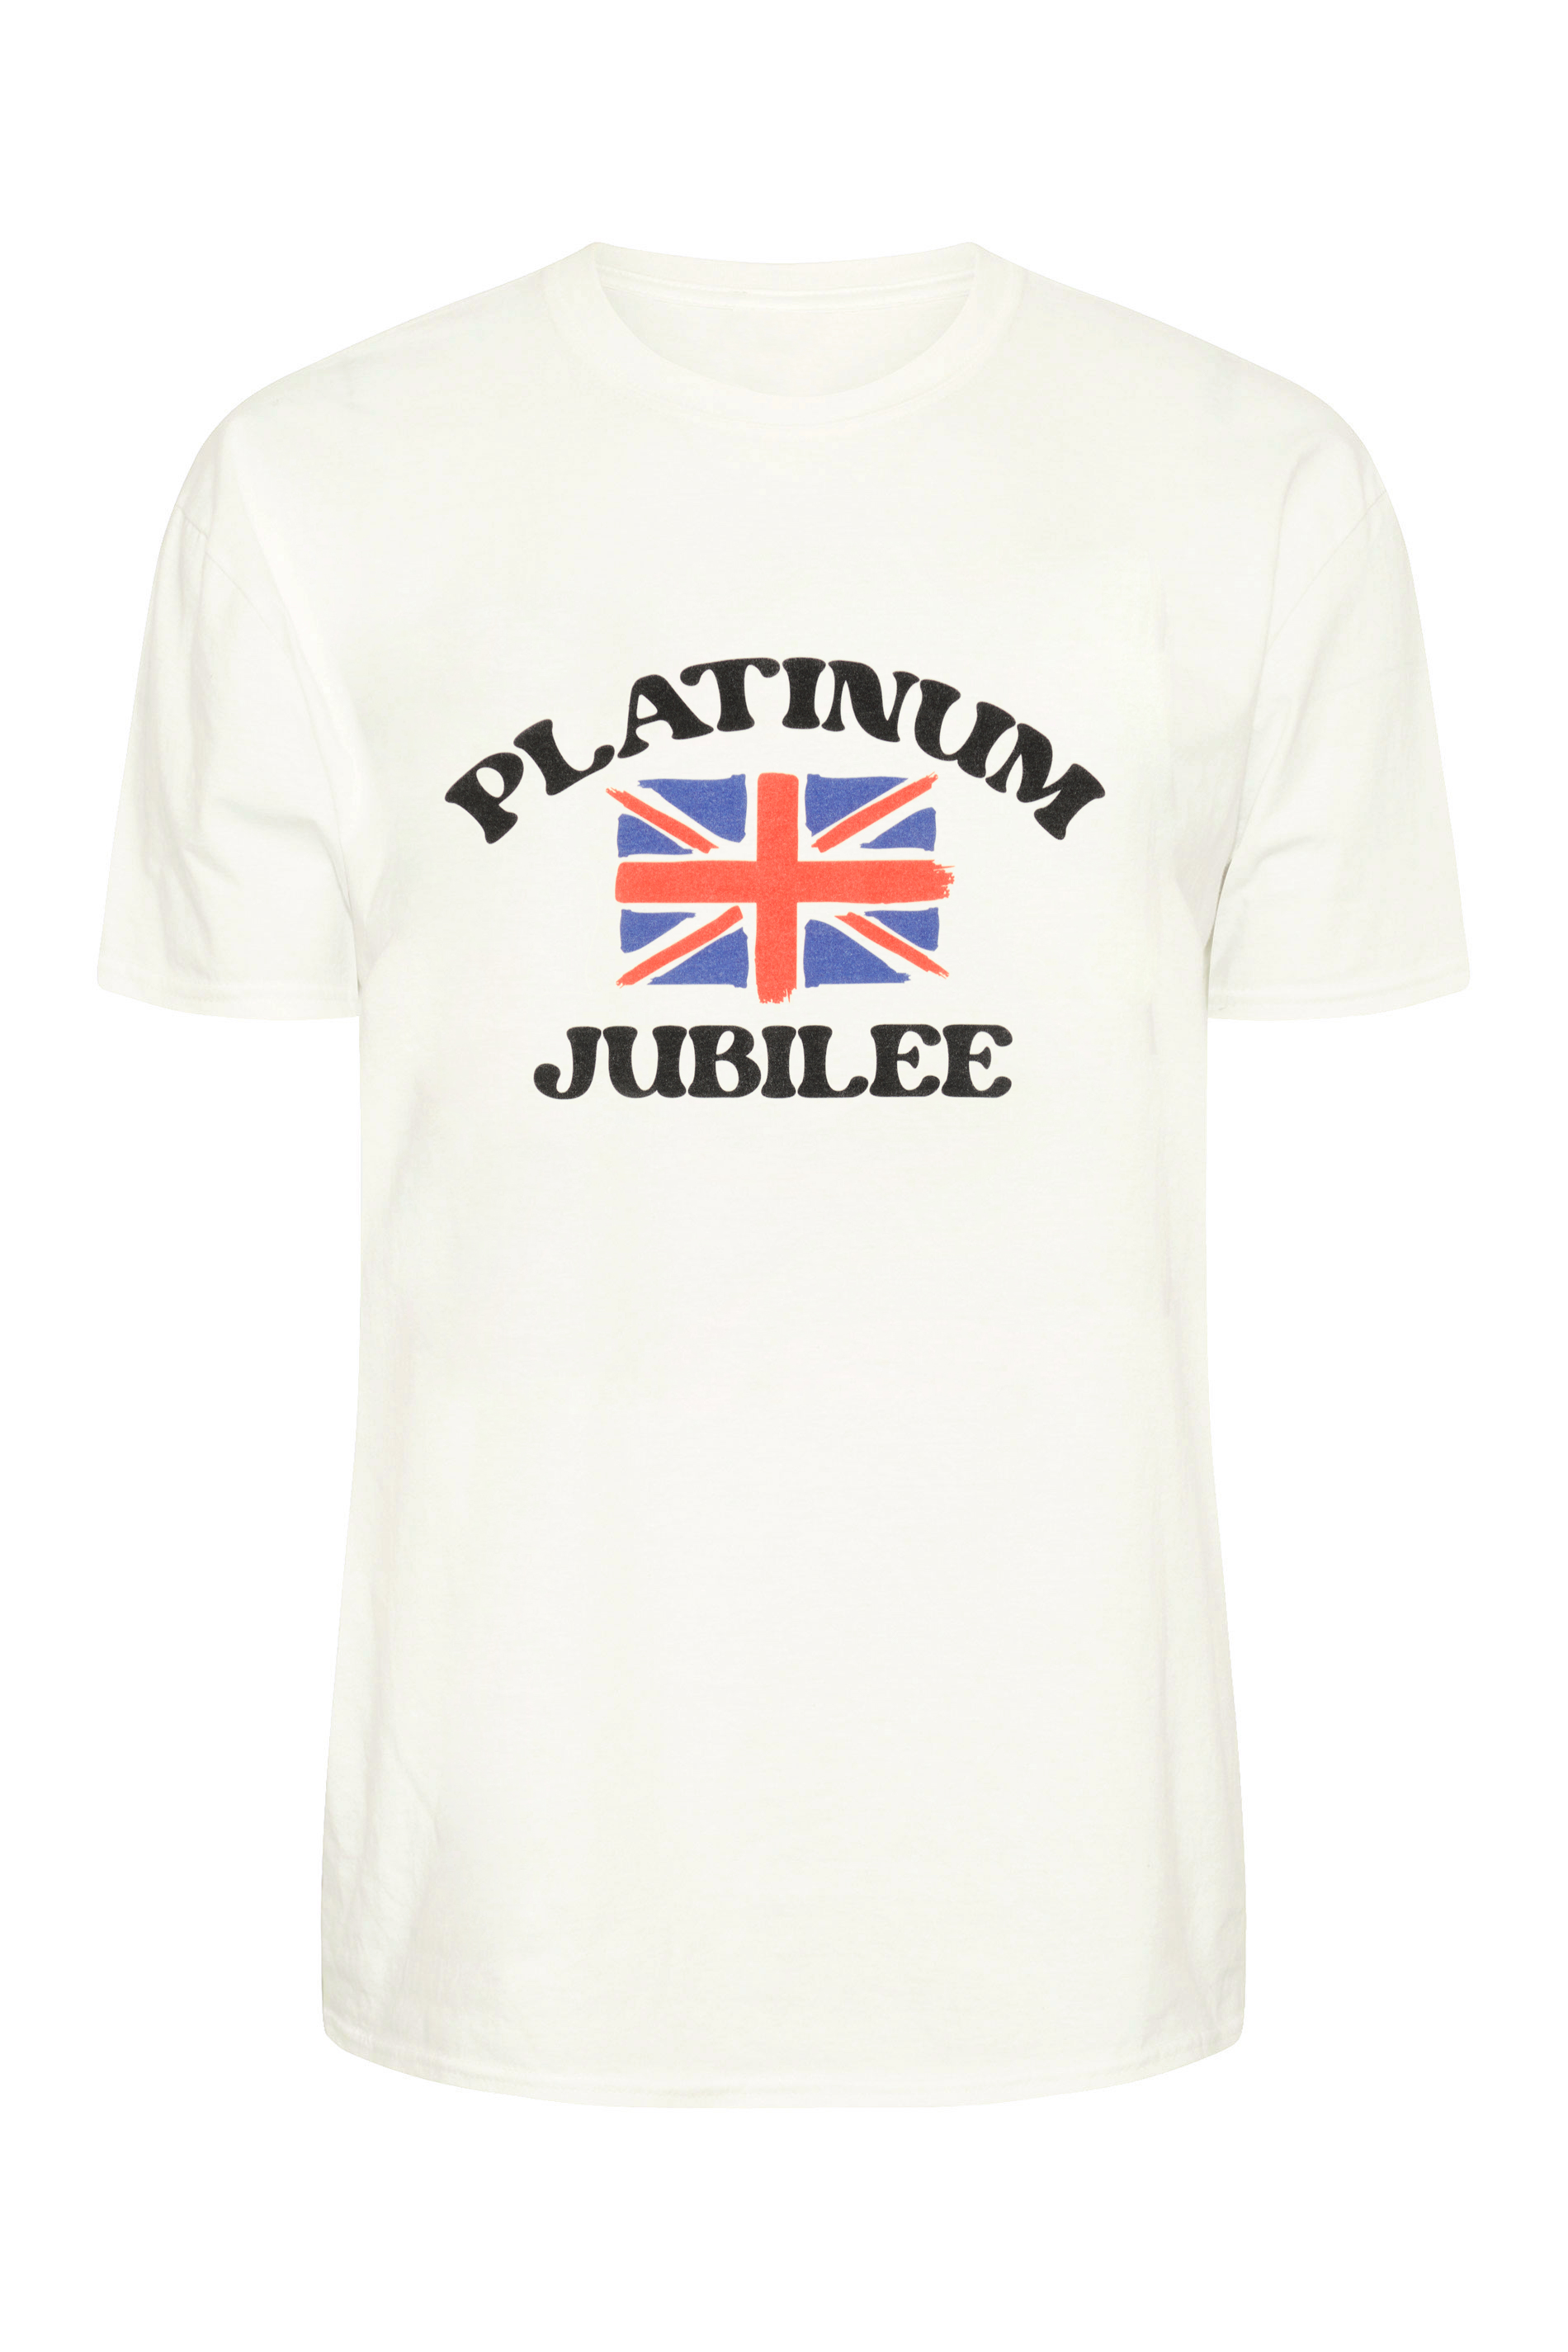 Grande taille  Tops Grande taille  T-Shirts | T-Shirt Blanc Drapeau 'Platinum Jubilee' - VF84175